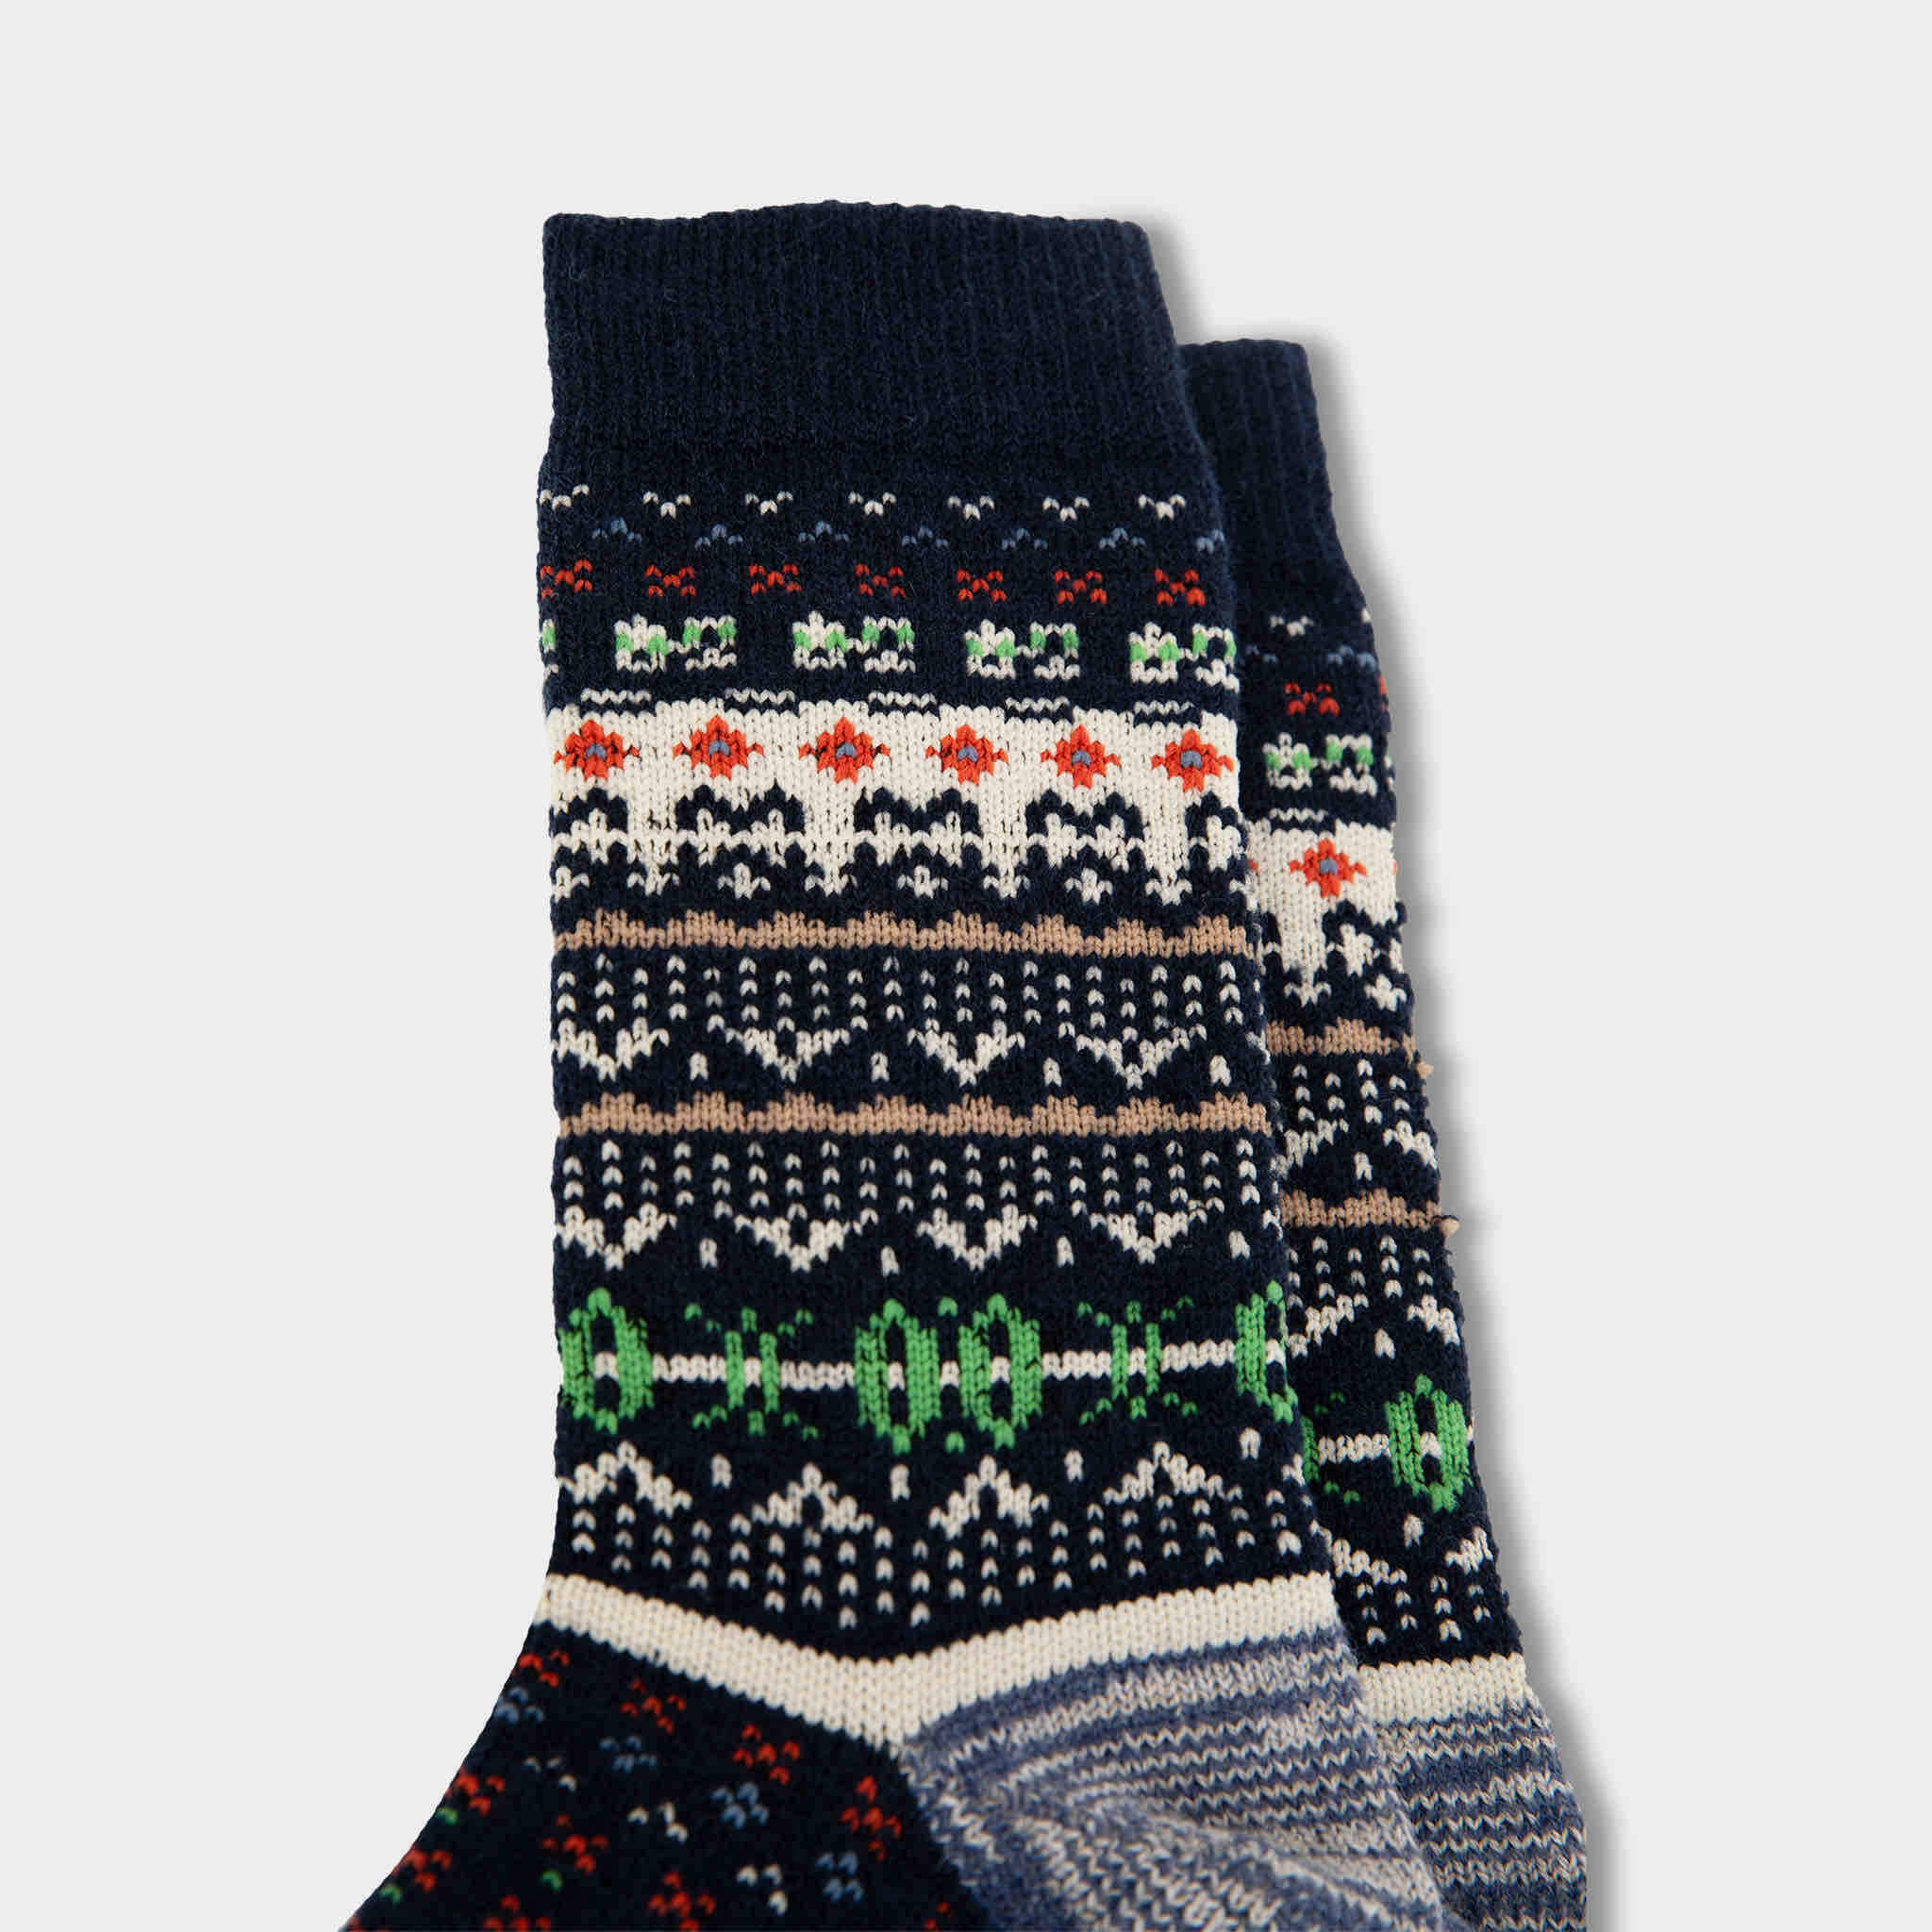 Scandinavian Knit Leg Warmers, 100% Wool Leg Warmers, Nordic Legwarmers,  Over the Knee Socks, Womens Boot Socks, Fair Isle Pattern, Hygge 